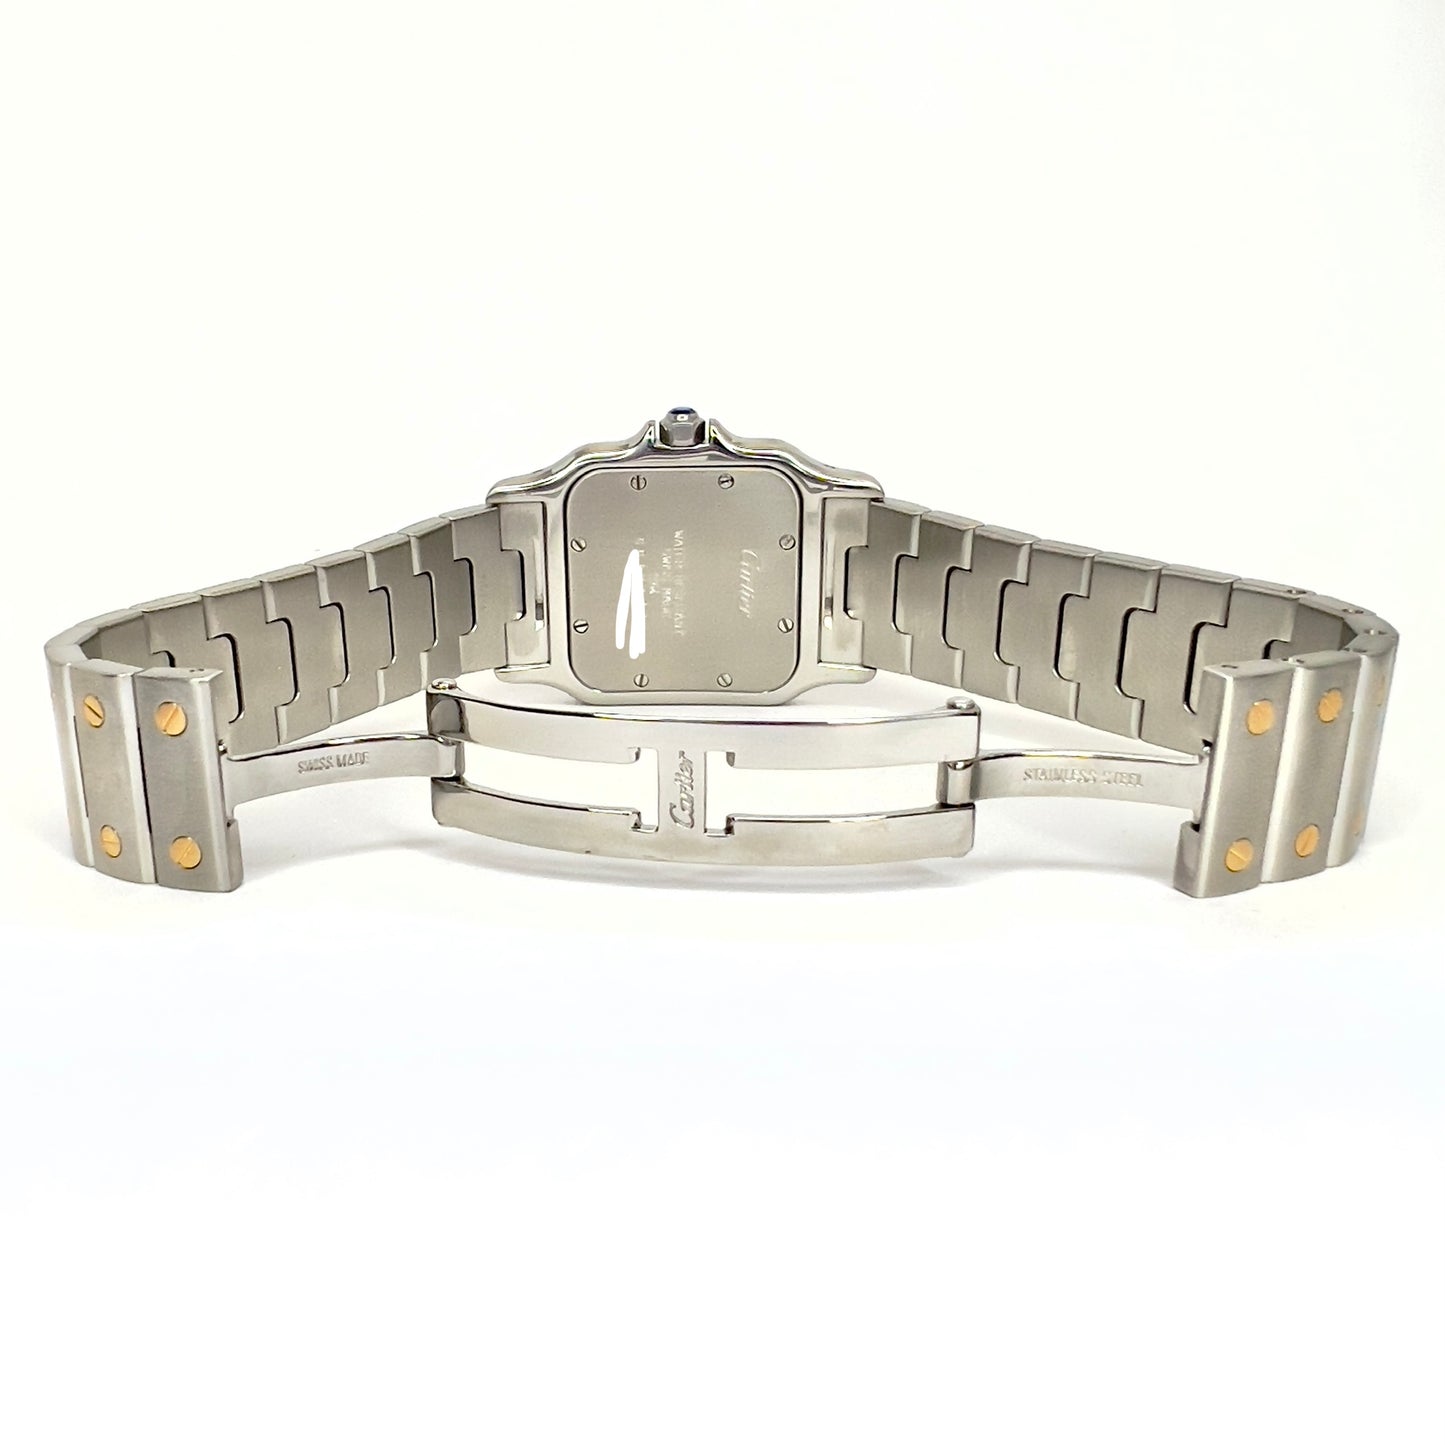 CARTIER SANTOS GALBEE 29mm Quartz 2 Tone 1.70TCW Diamond Watch NEW Model